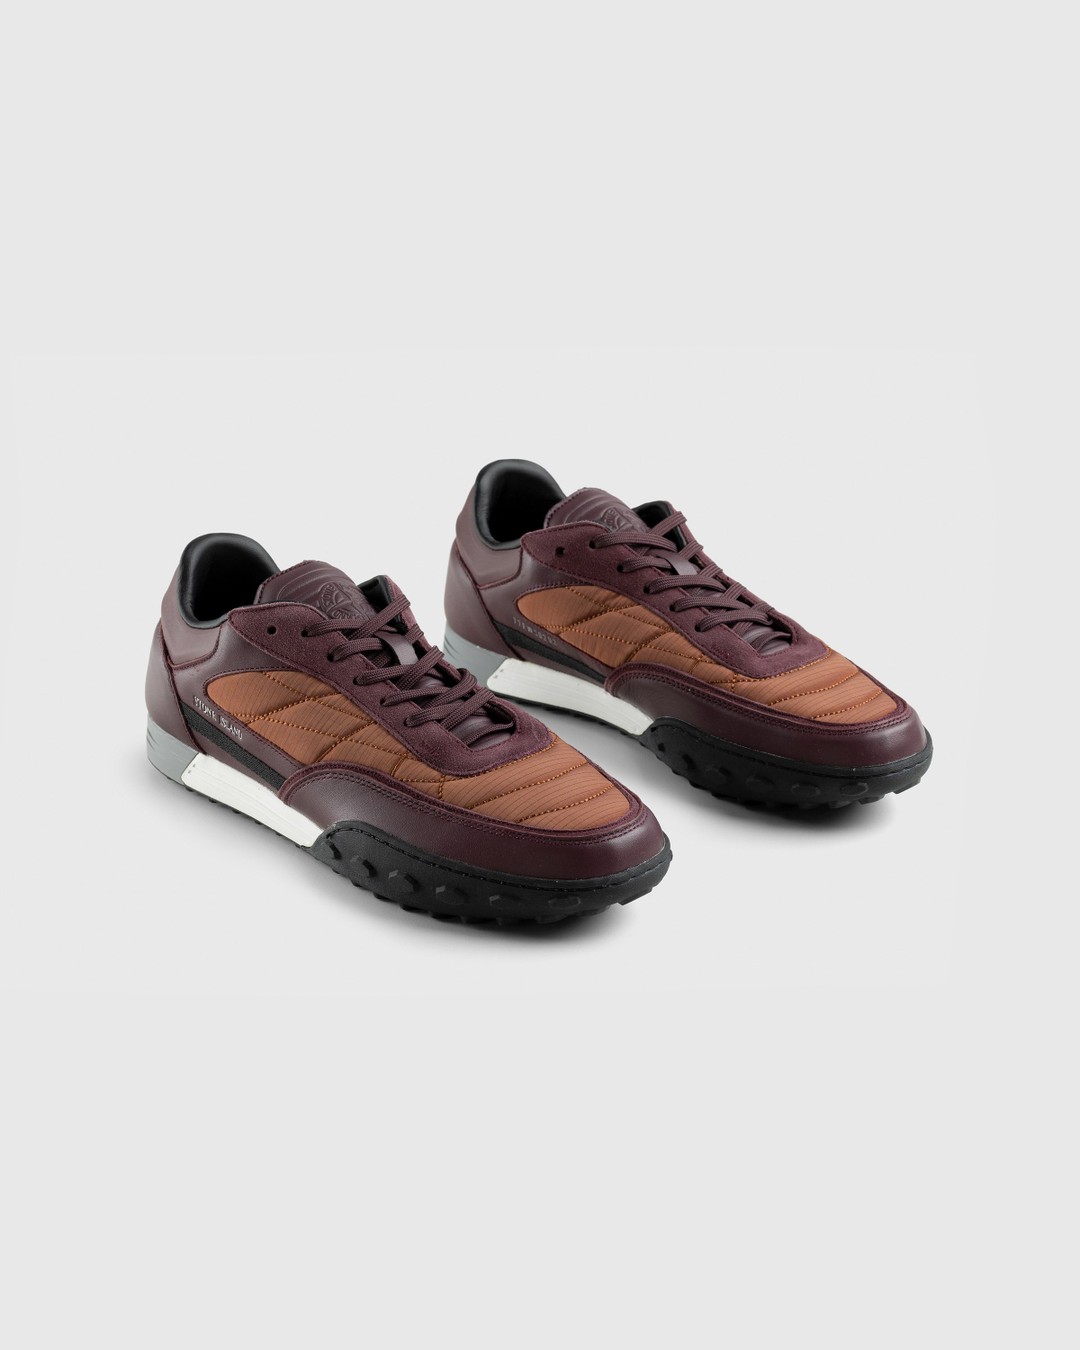 Stone Island – Football Sneaker Burgundy - Low Top Sneakers - Red - Image 3